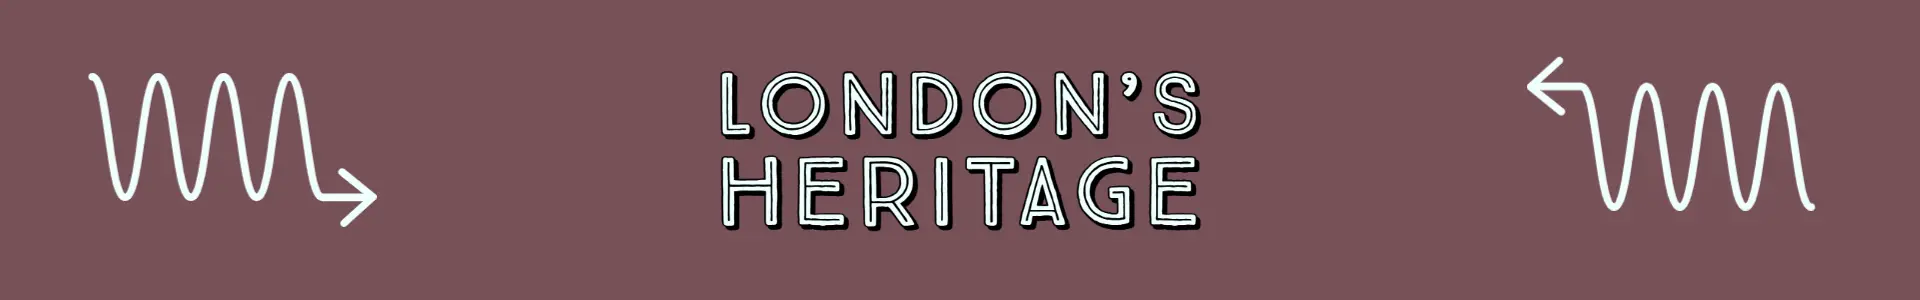 London's Heritage